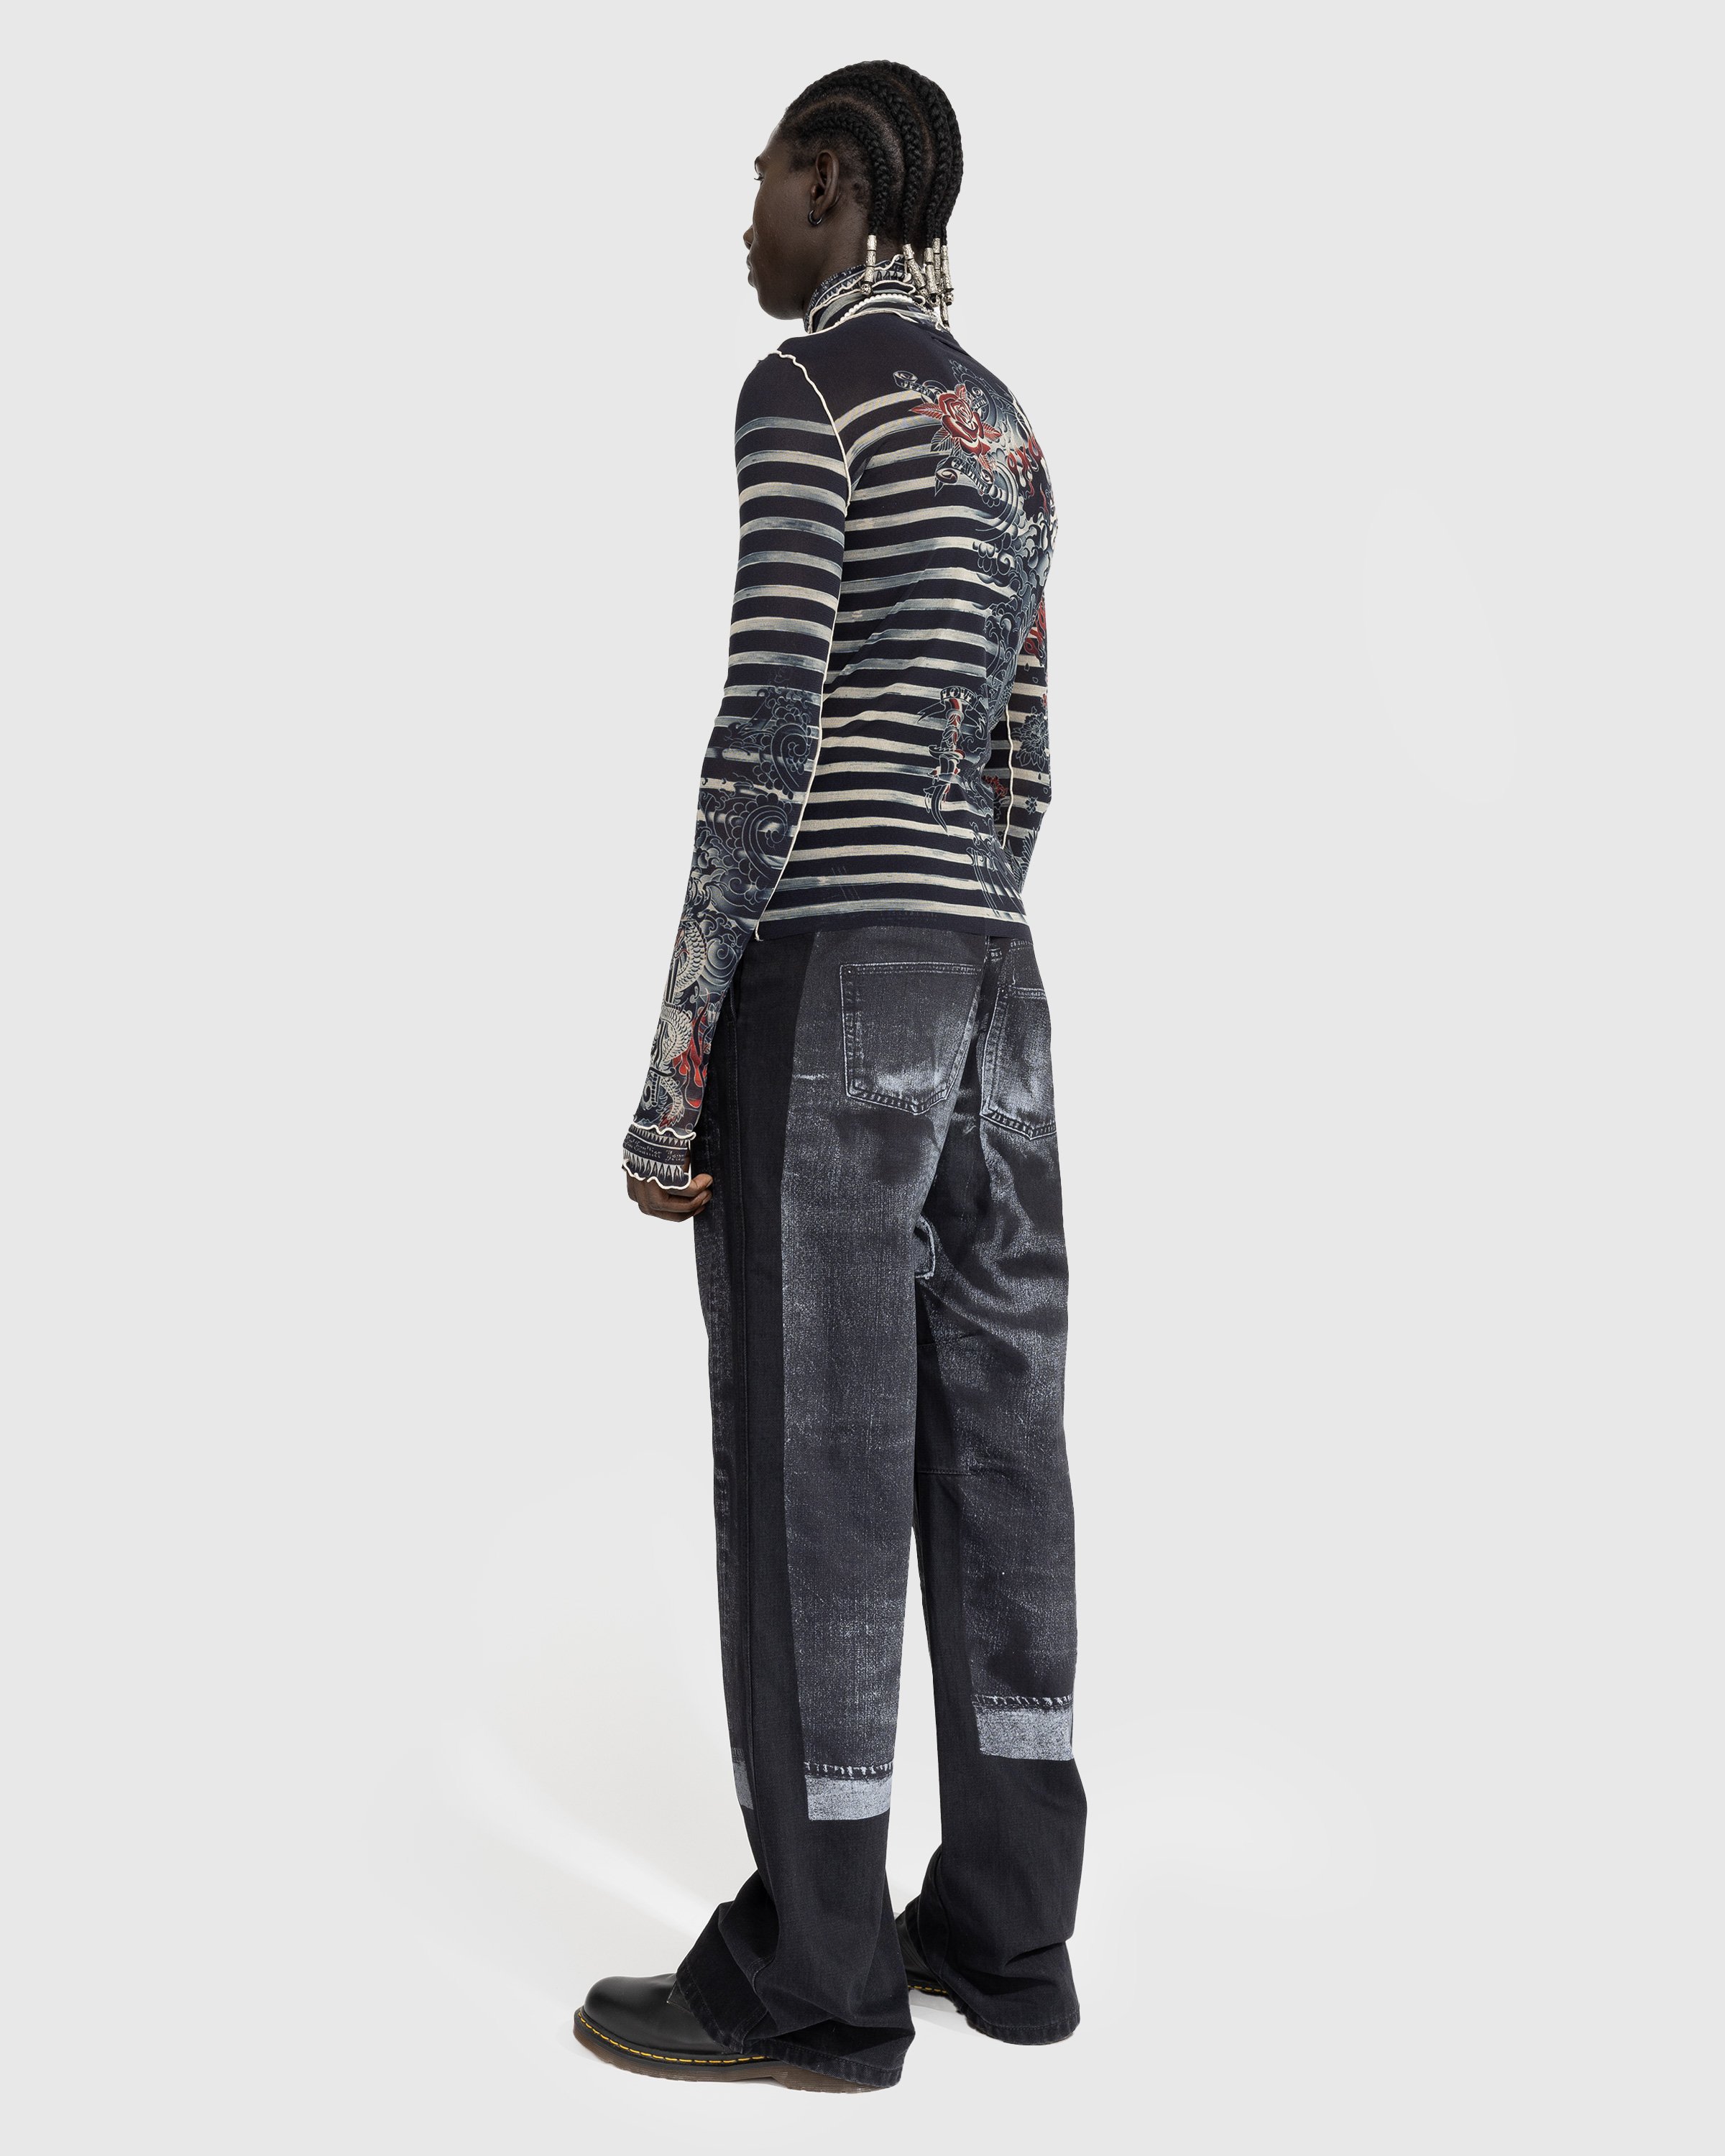 Jean Paul Gaultier - Denim Trompe L'oeil Jeans Black/Gray - Clothing - Black - Image 4